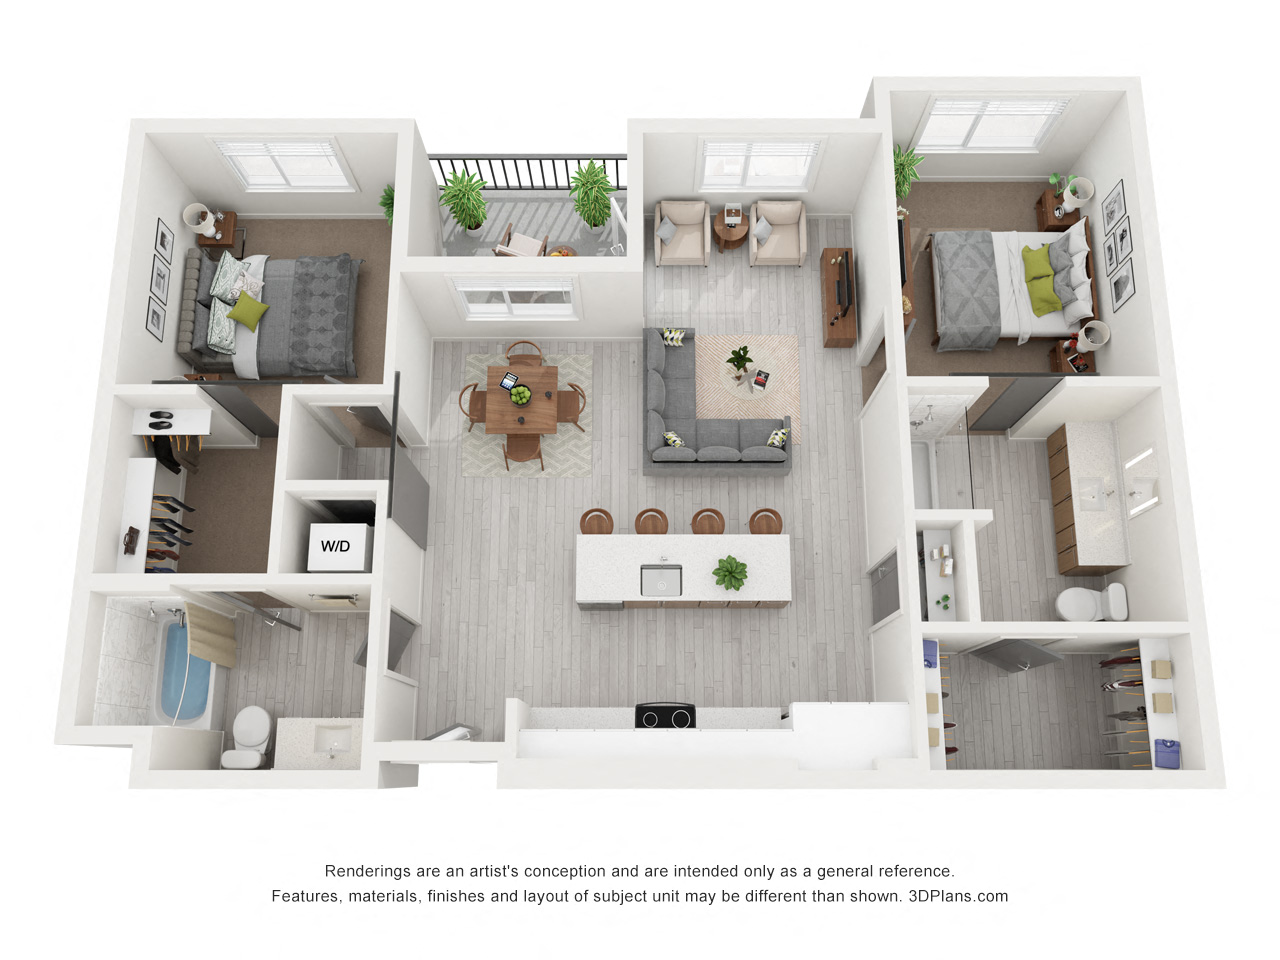 The Eisley_B4 2 bedroom floor plan